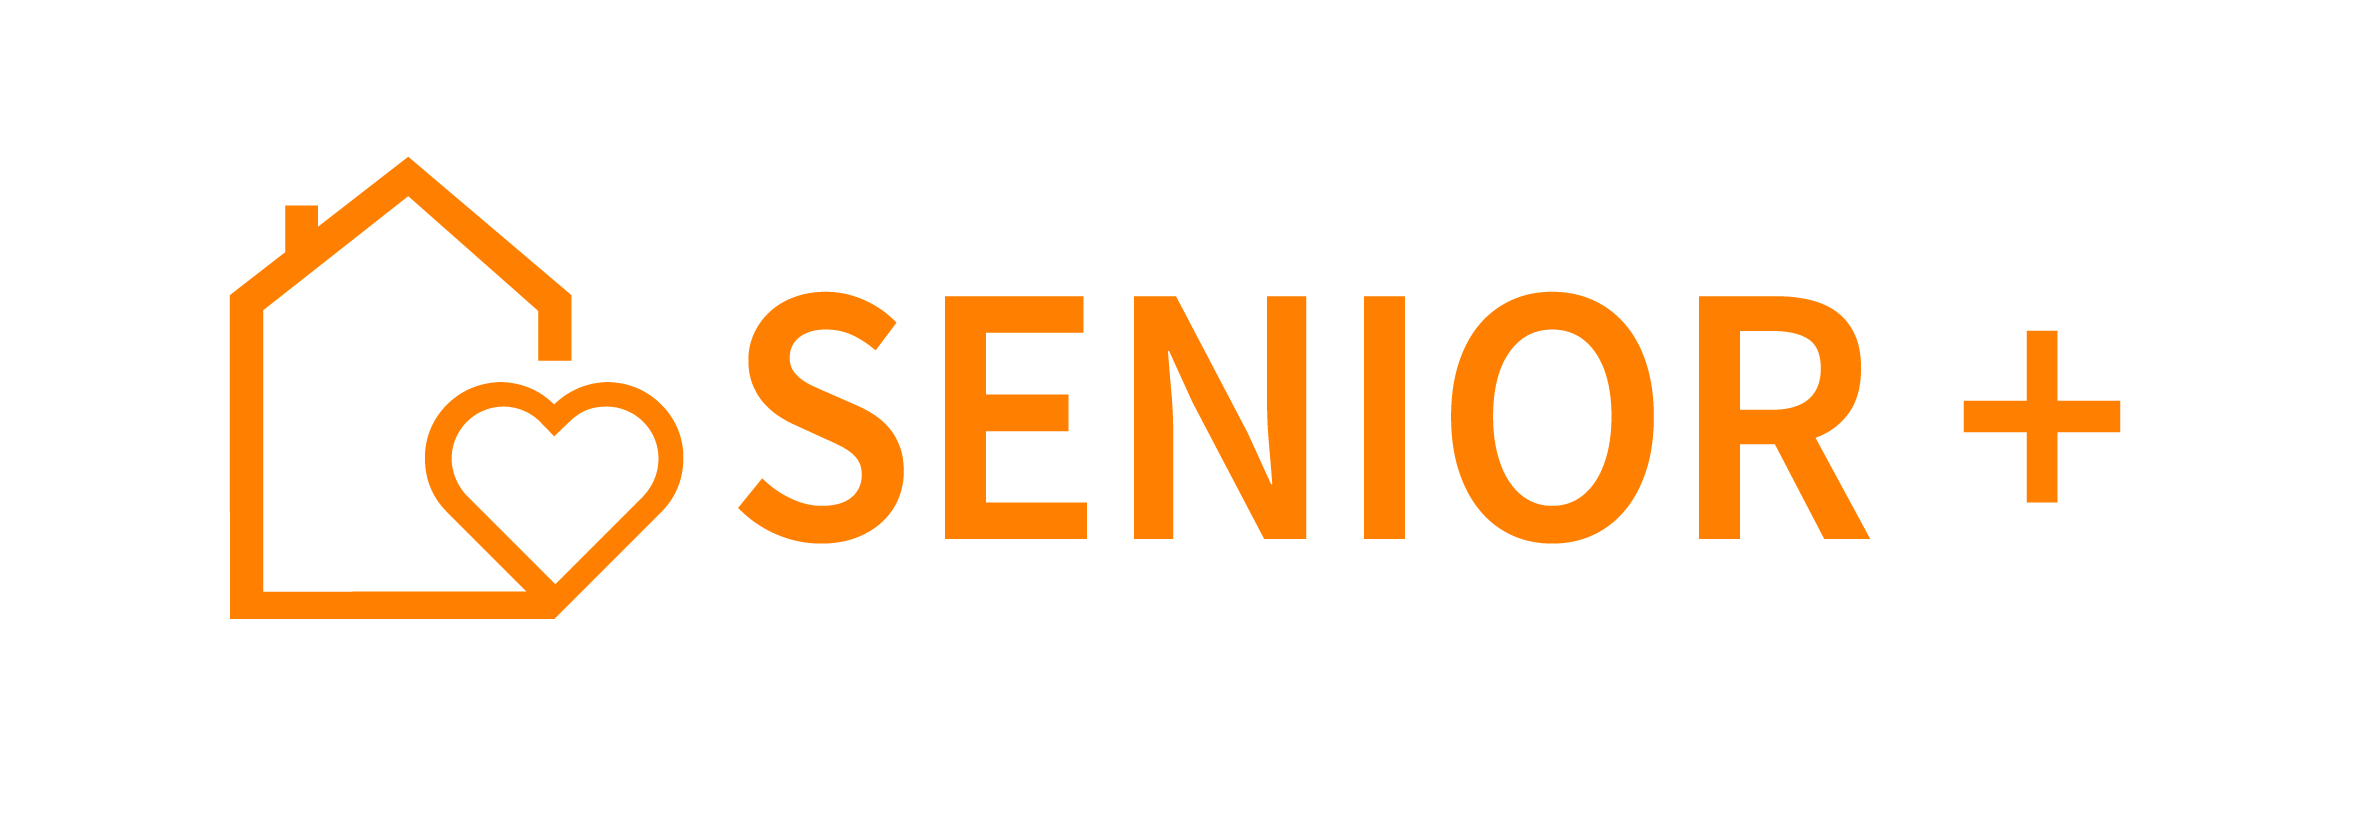 senior-plus-logo.jpg